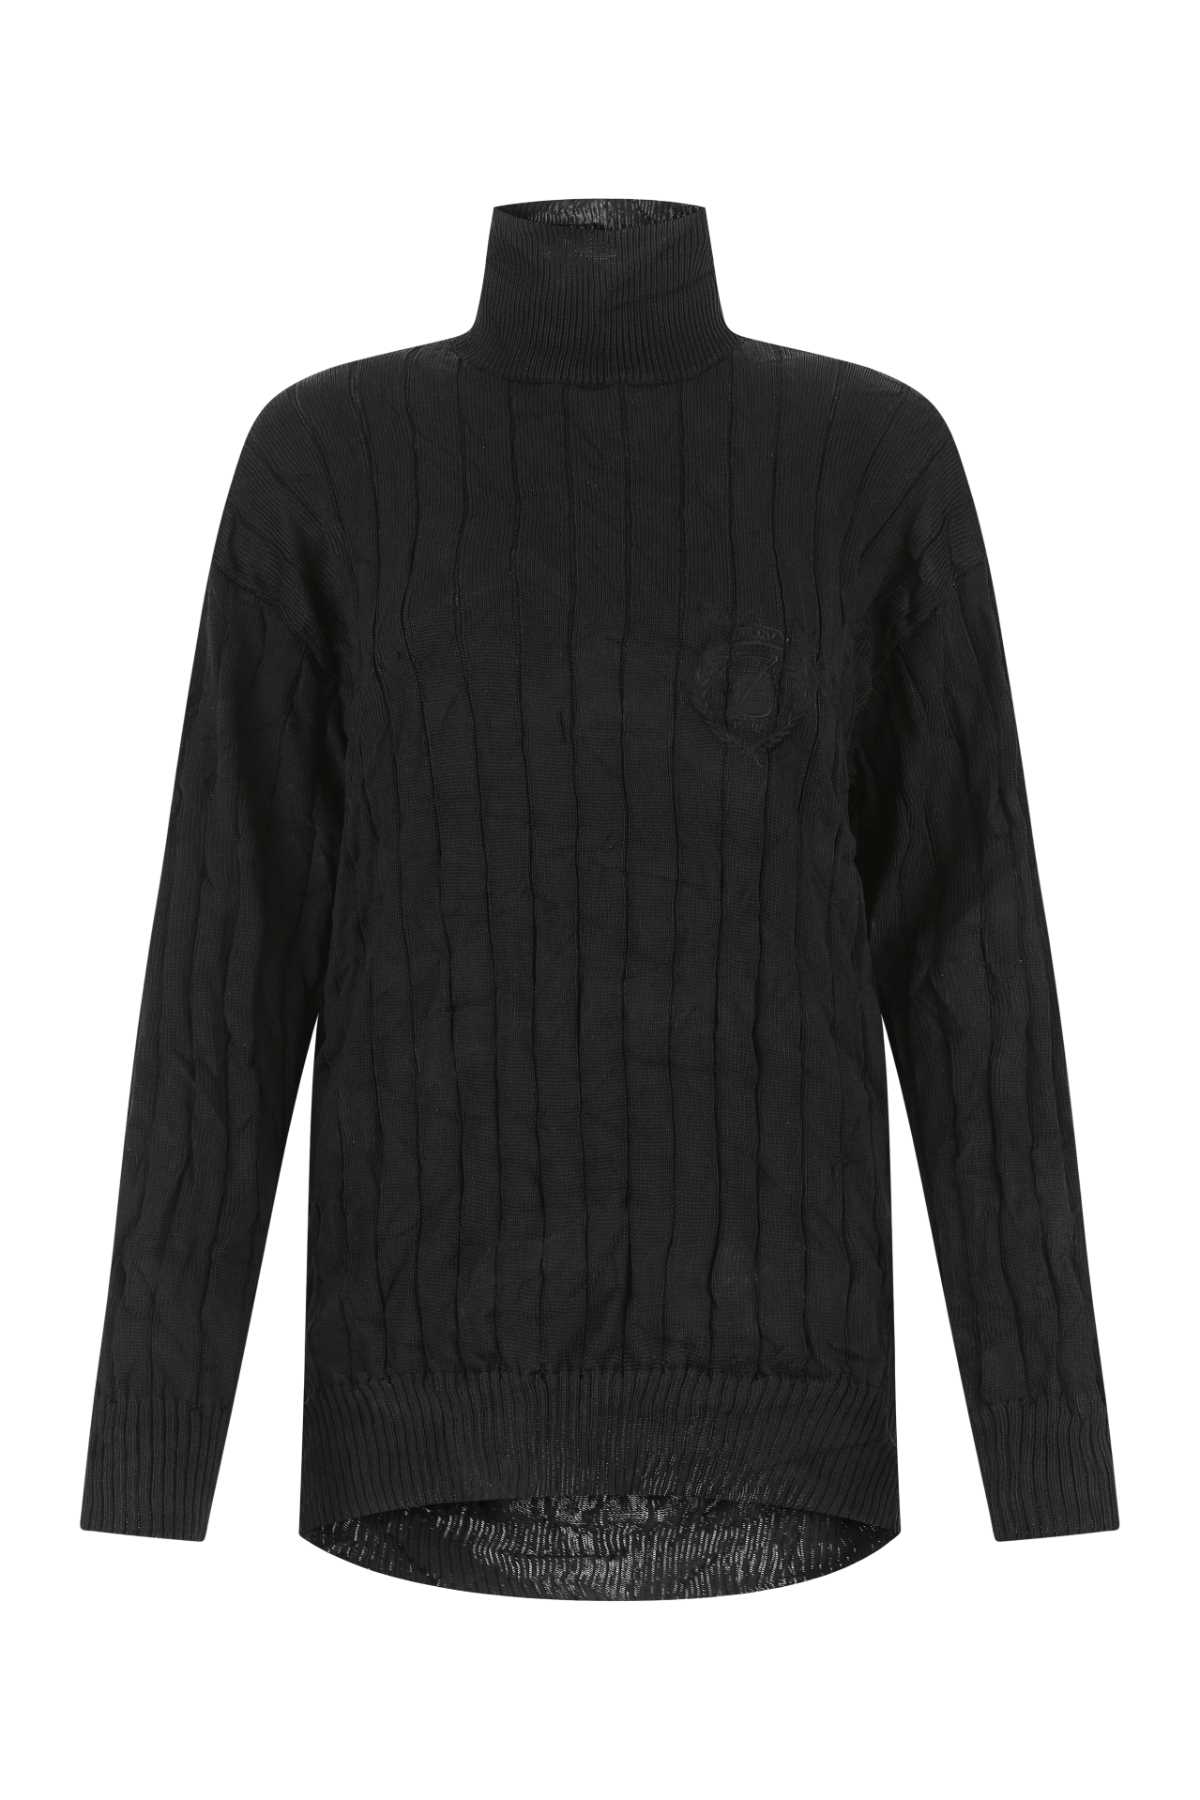 Black Silk Blend Oversize Sweater